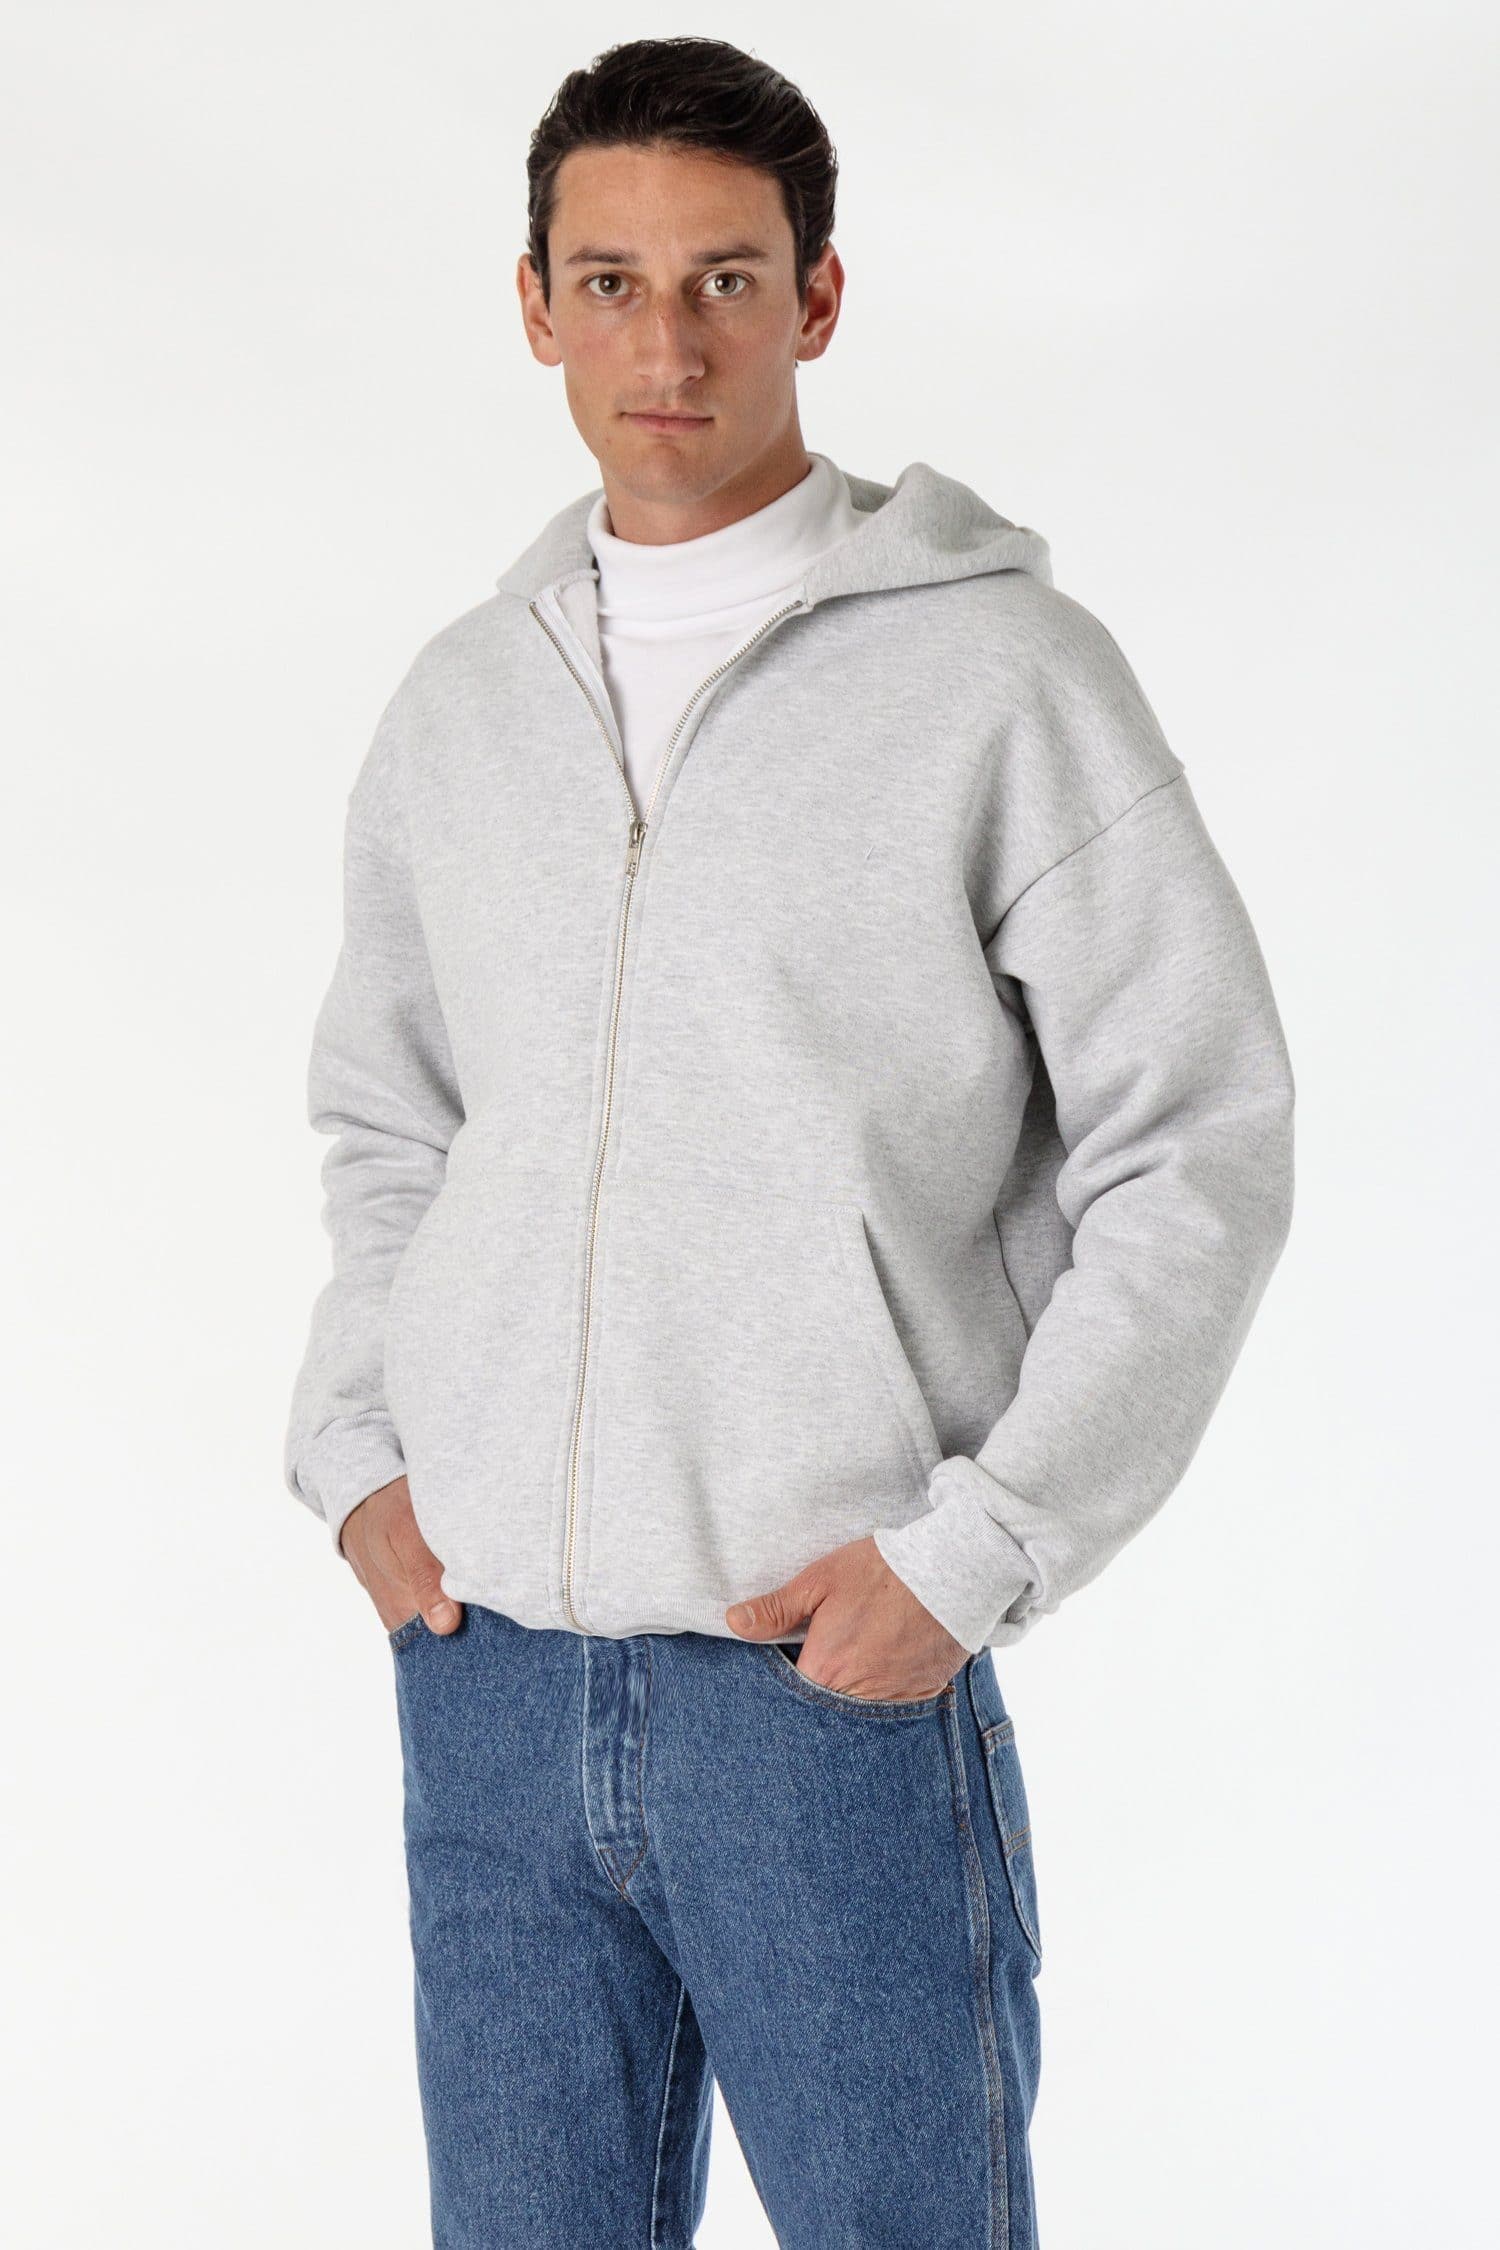 HF-10 - 14oz. Heavy Fleece Zip Up Hooded Sweatshirt – Los Angeles